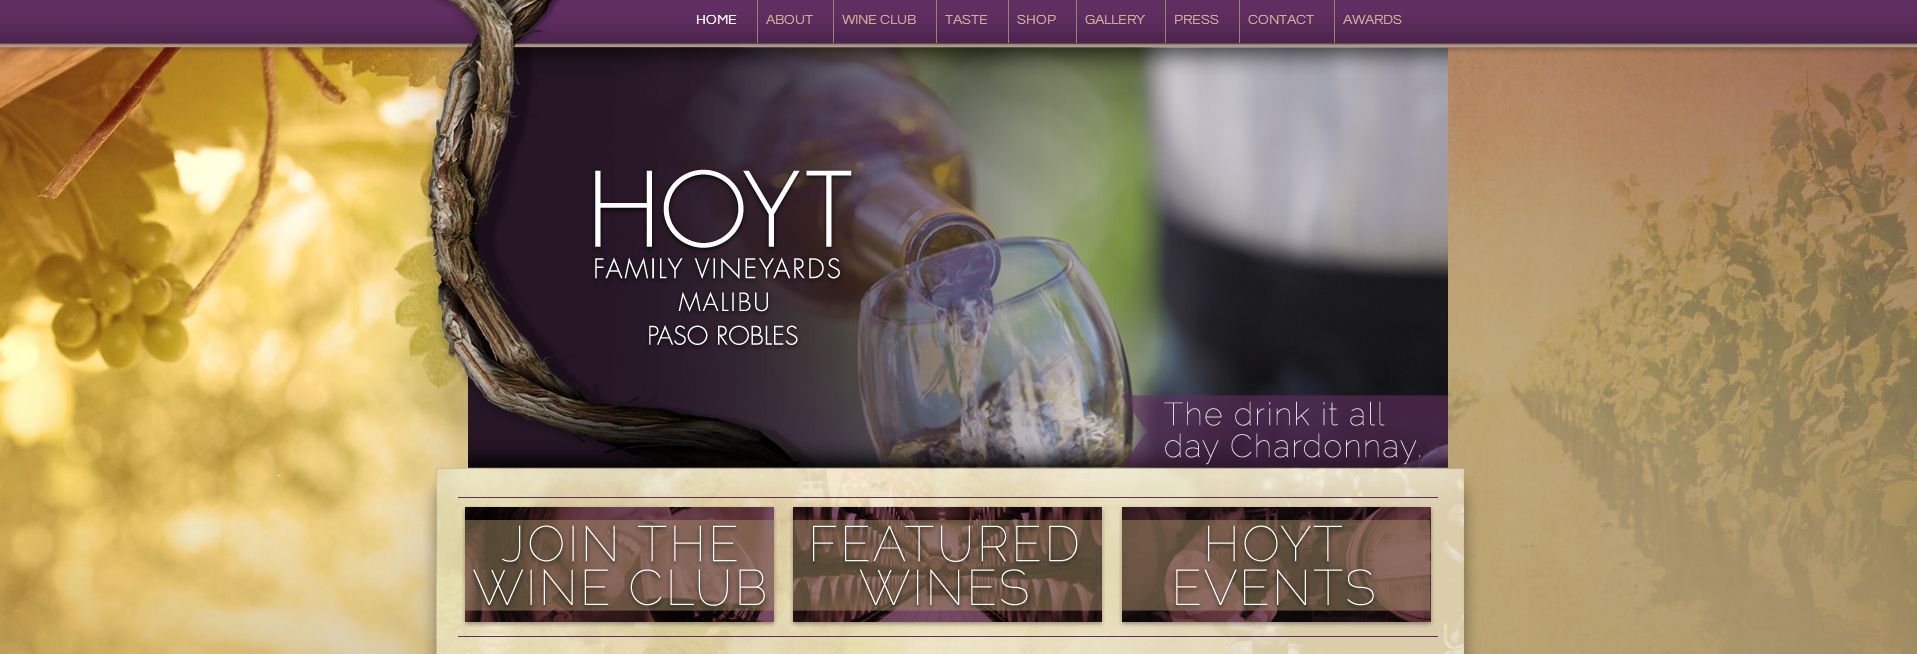 hoyt family vineyards website